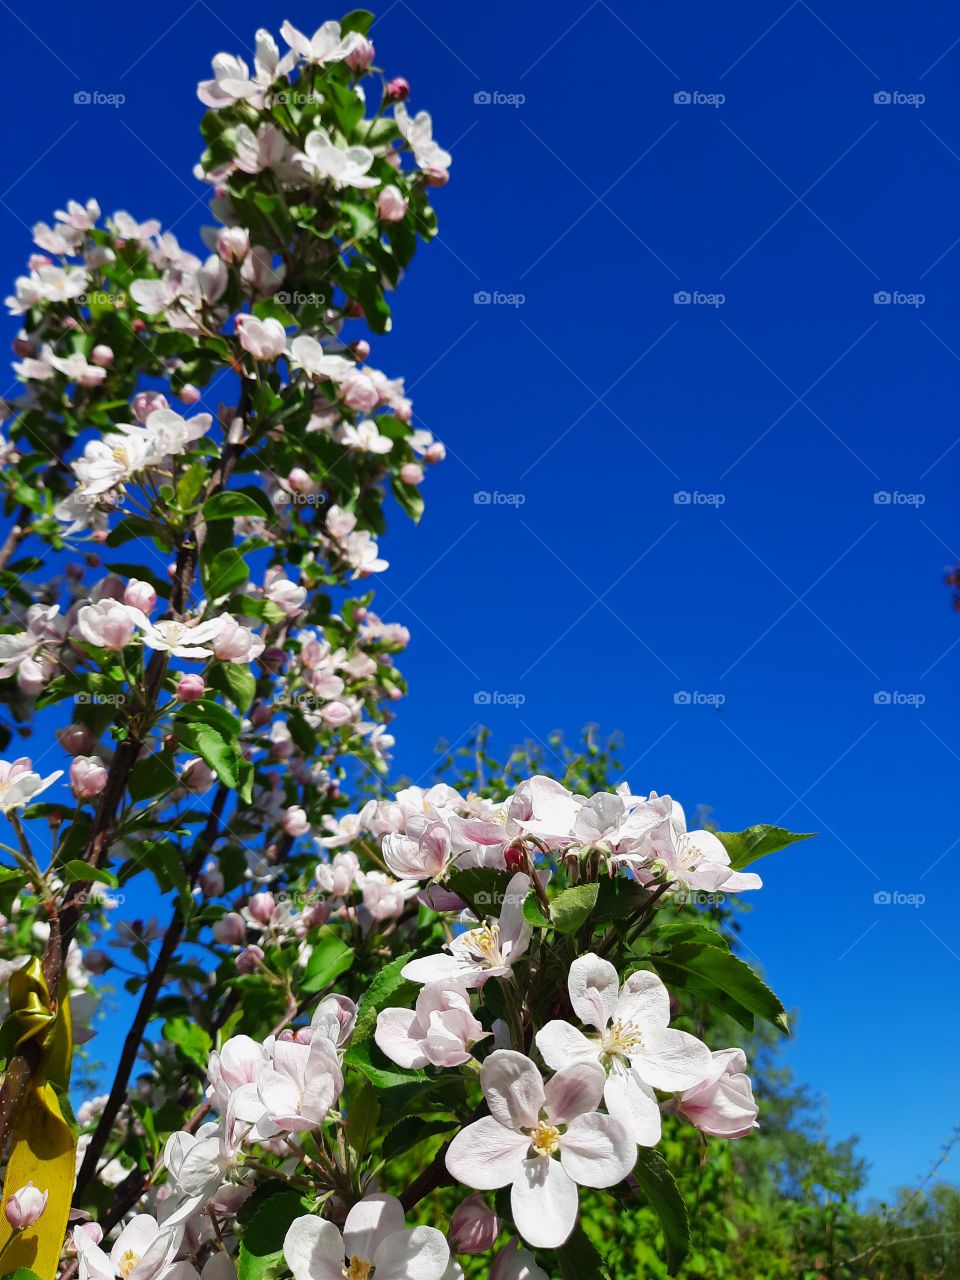 sunlit flowers of blooming apple tree against clear sky